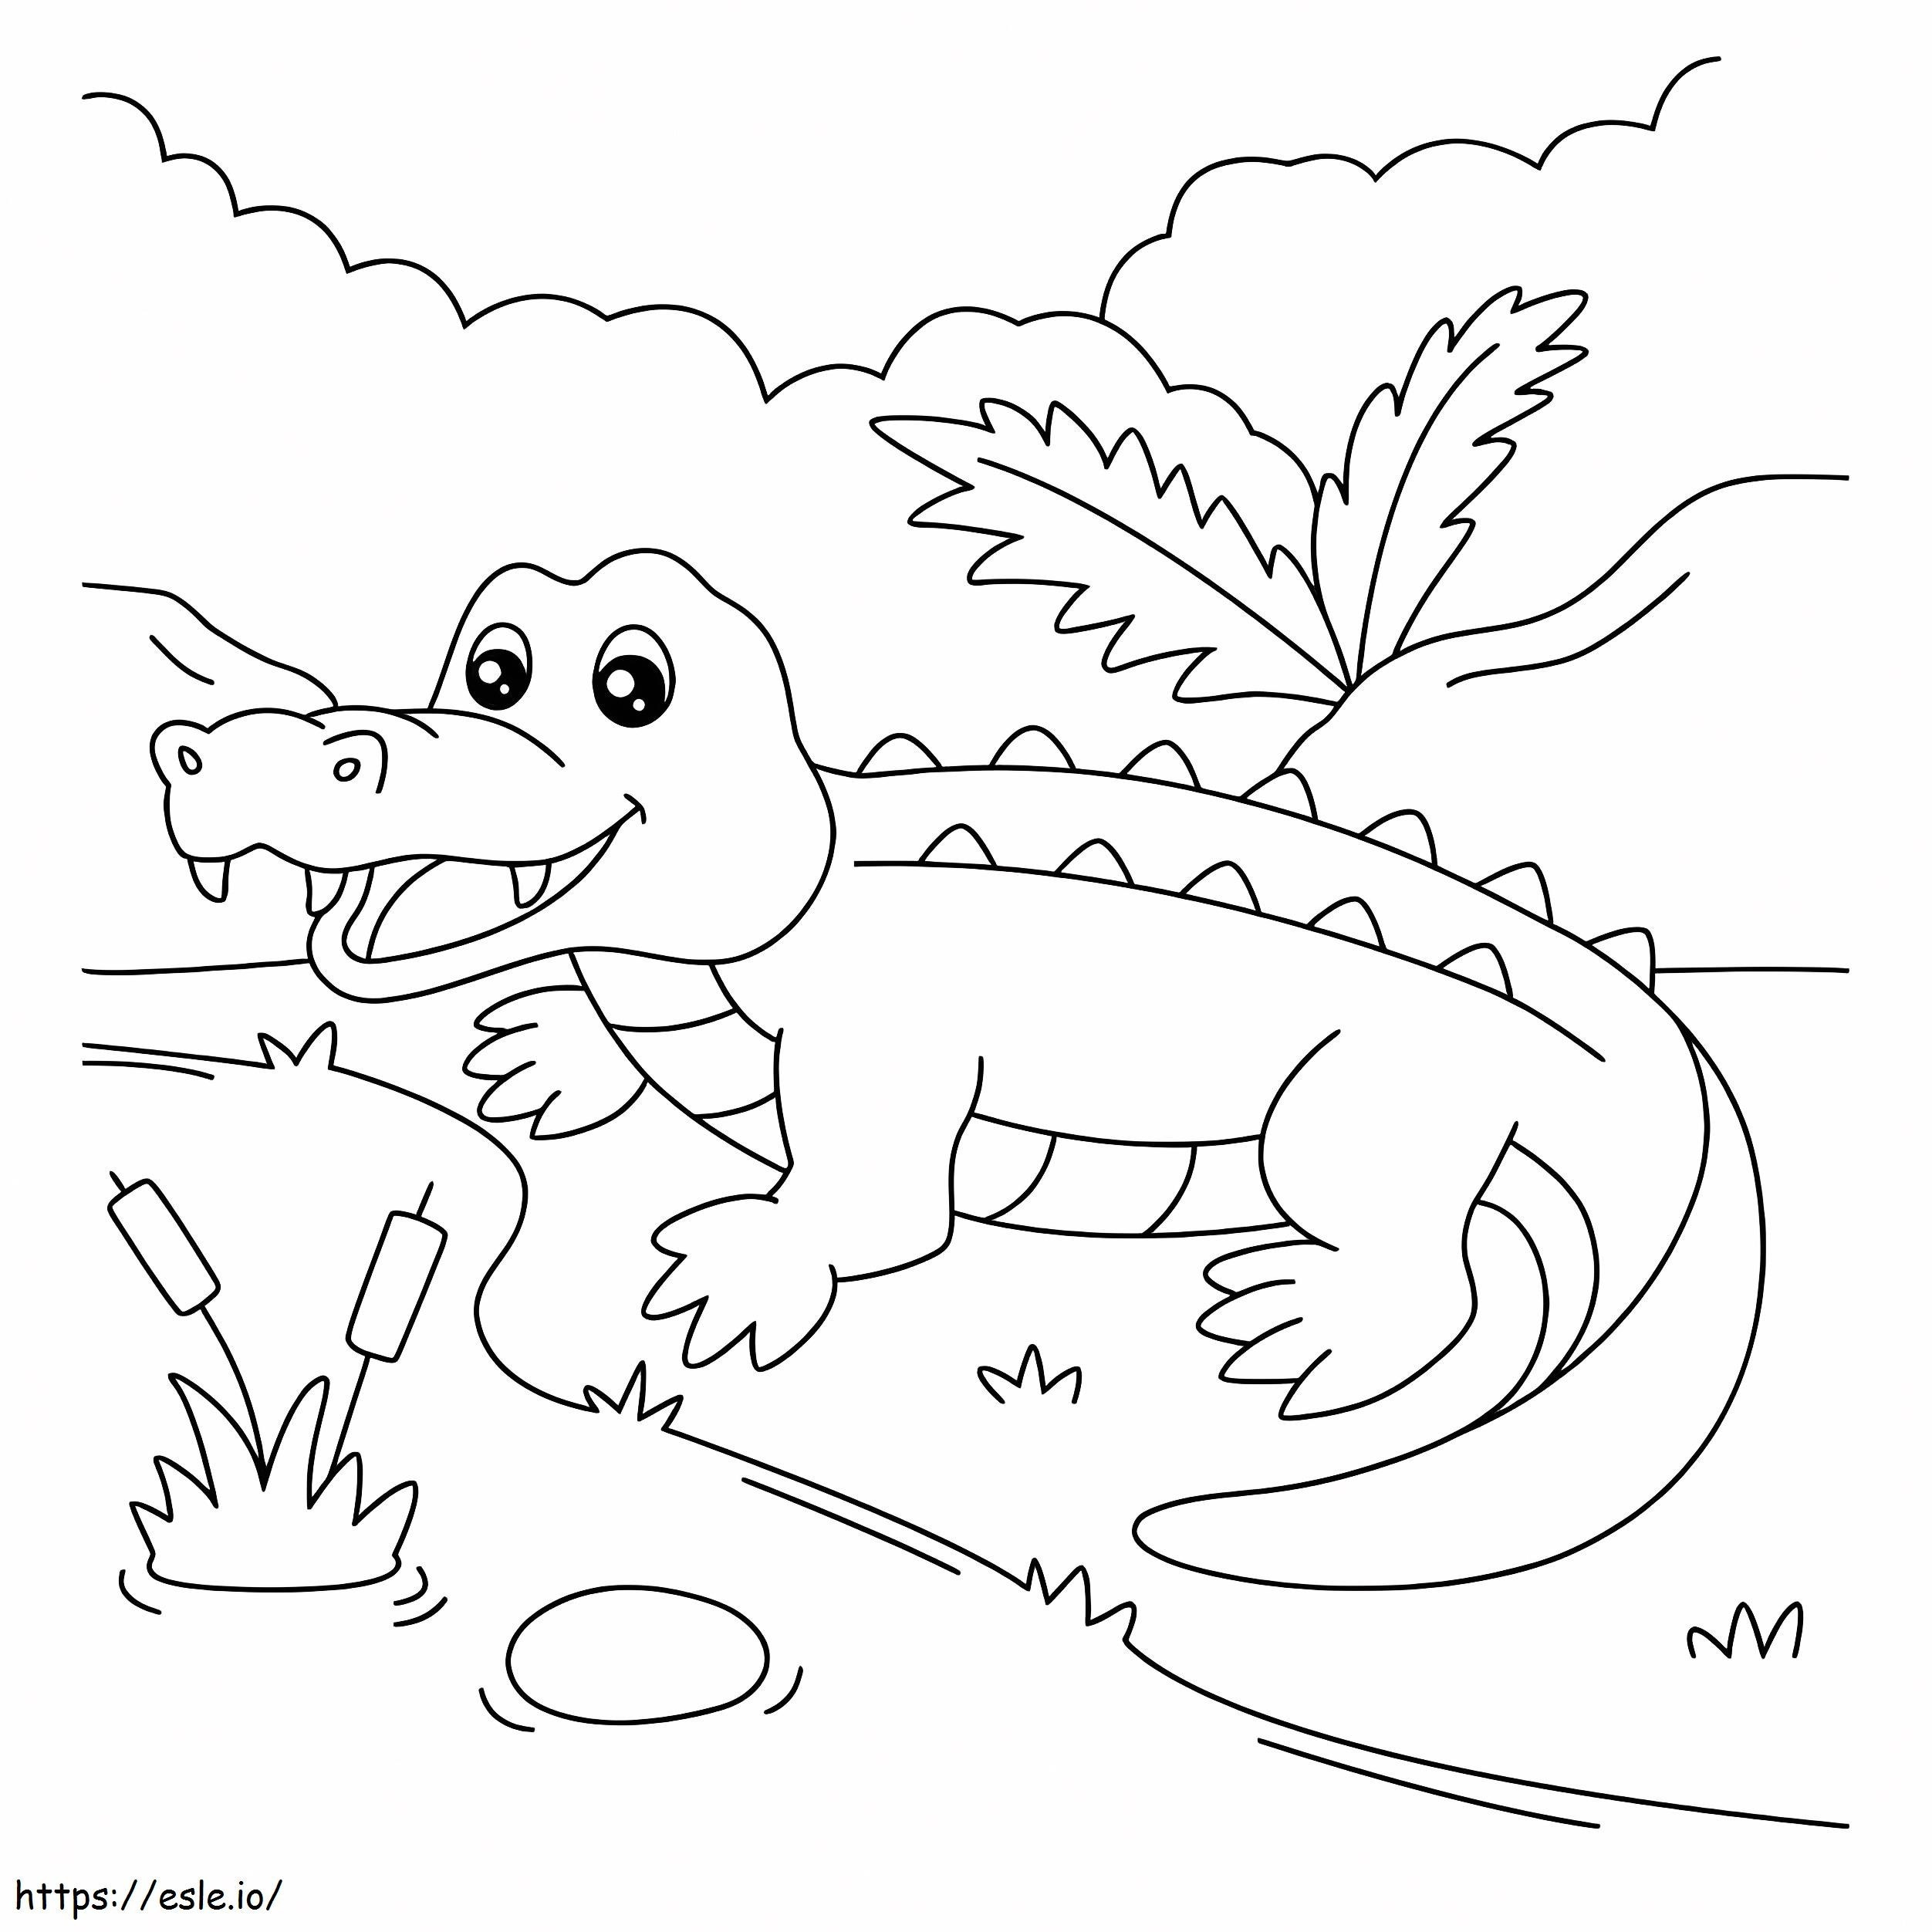 Fun Crocodile coloring page